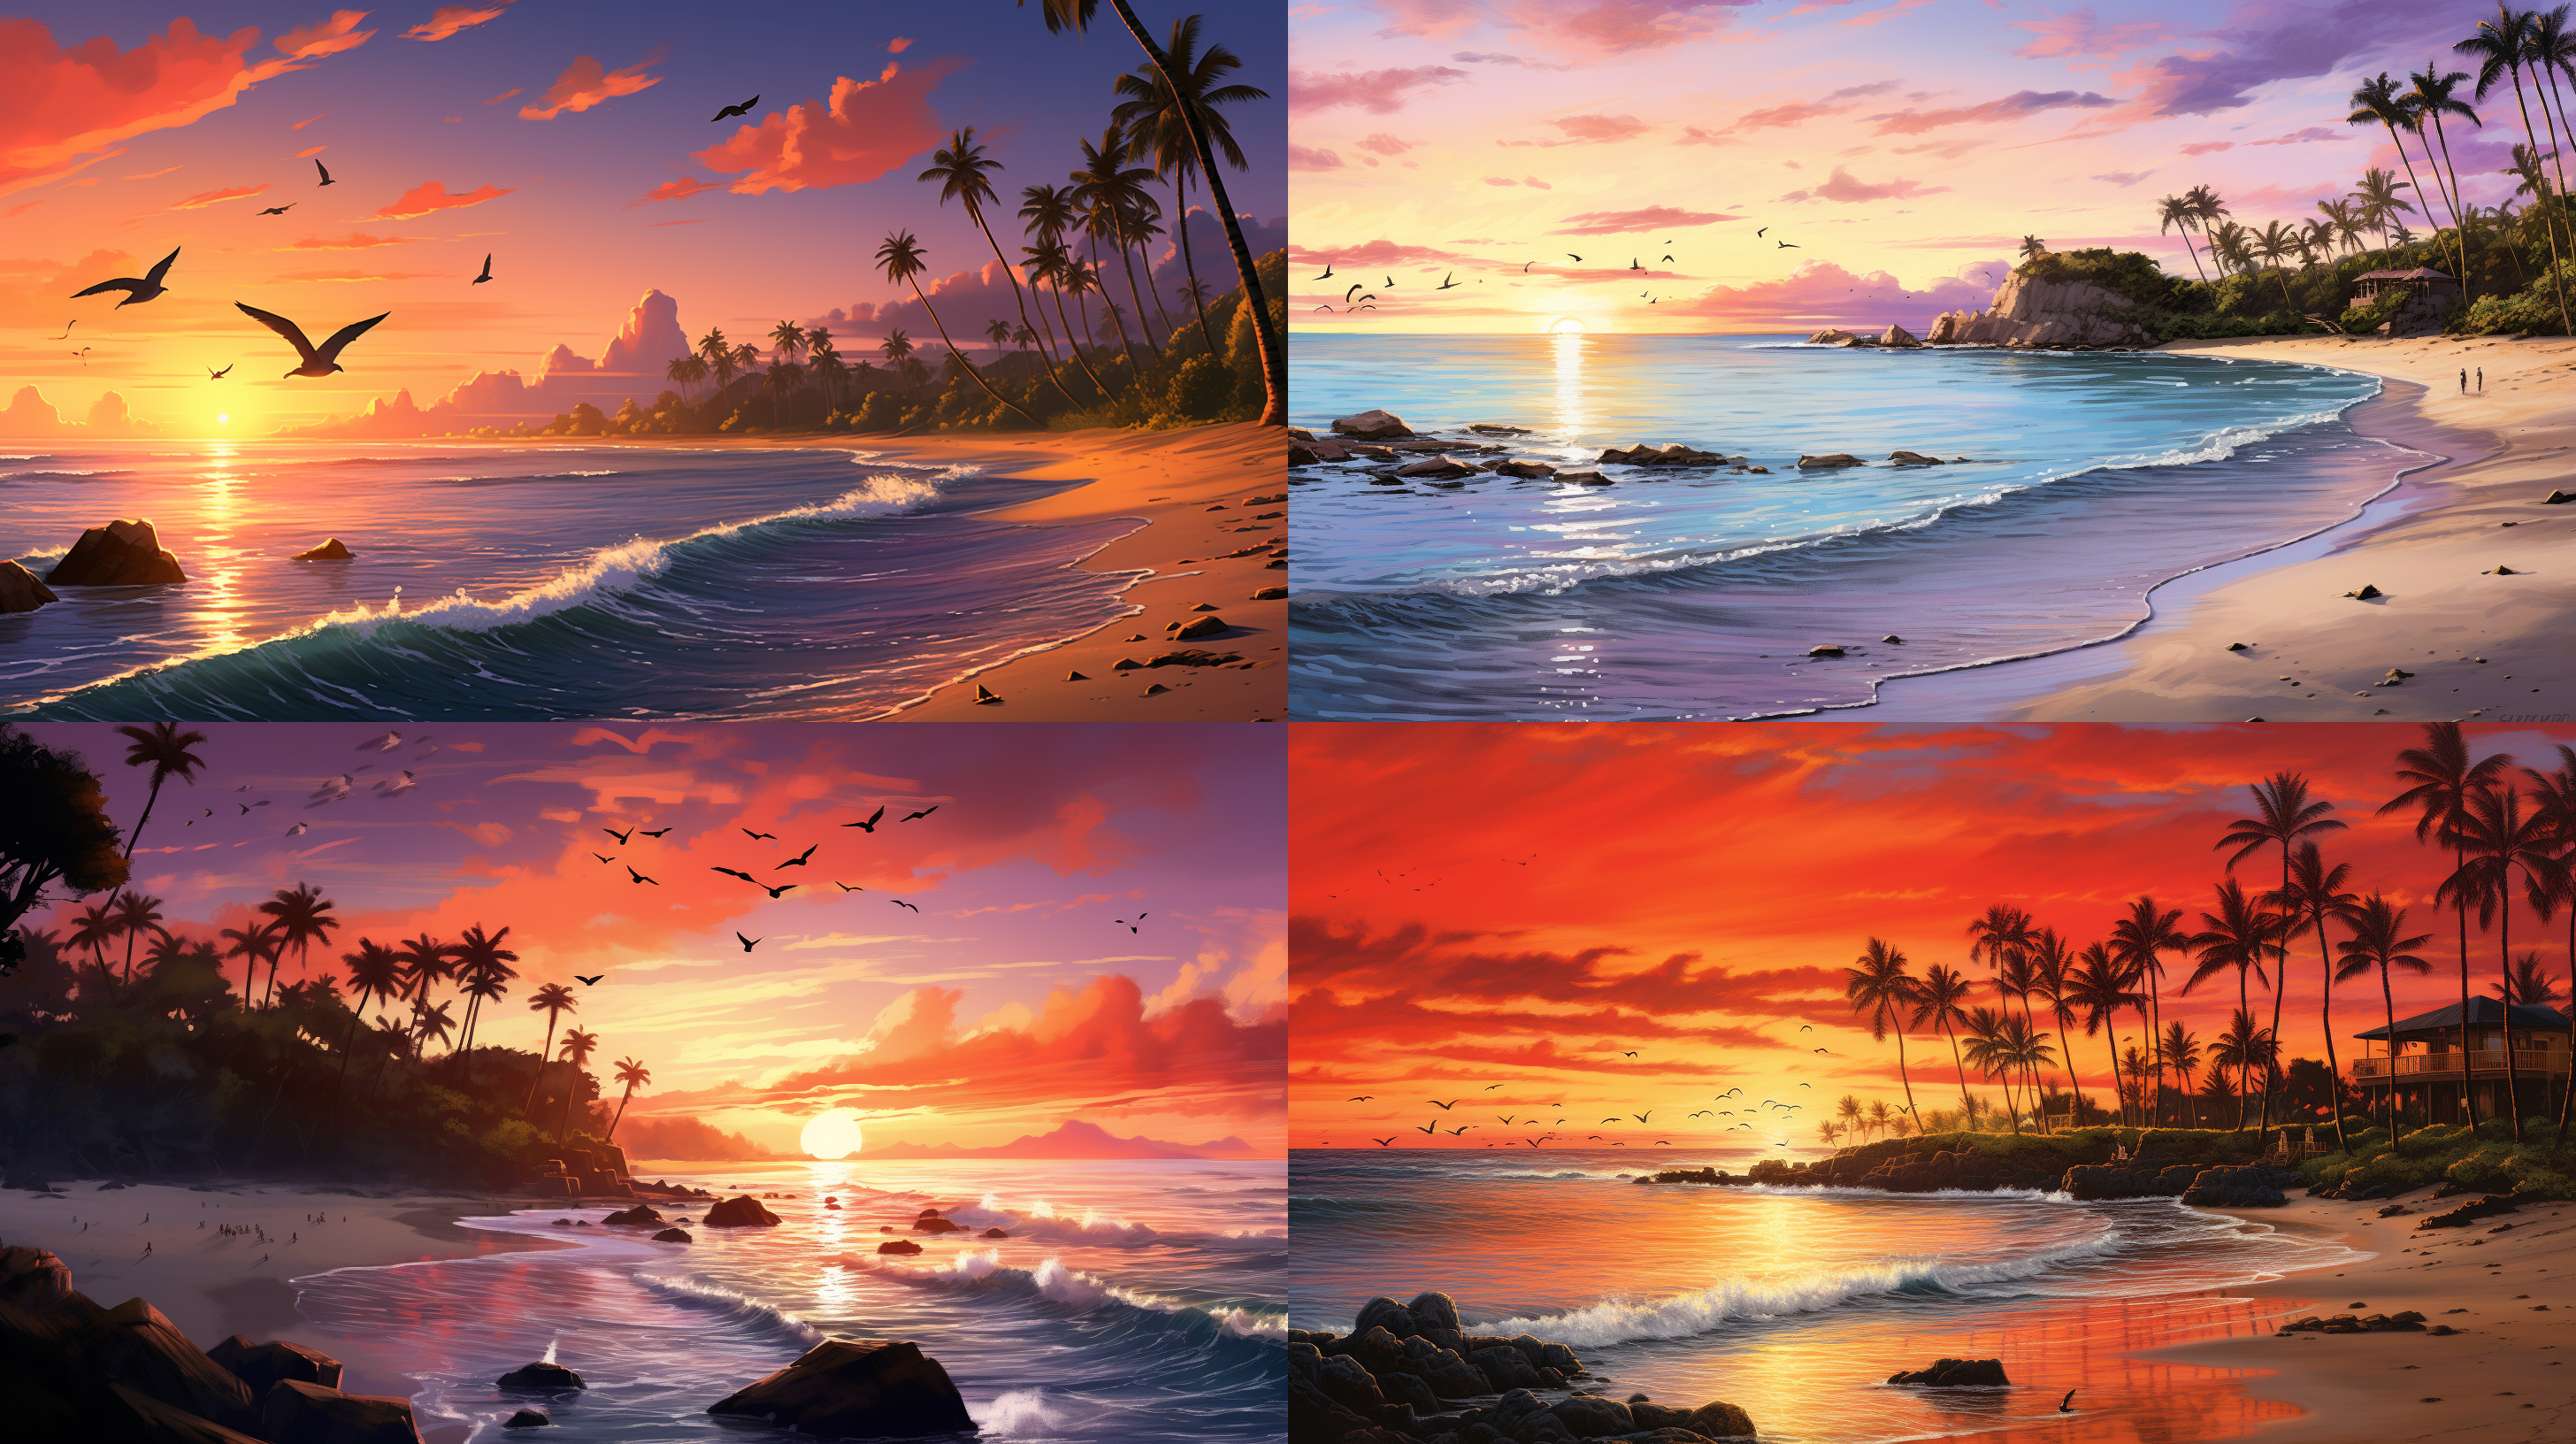 owravs A pastel drawing of a serene Hawaiian beach at sunset. T 6ea567a4 63e7 4fab bd44 24fff27d98eb